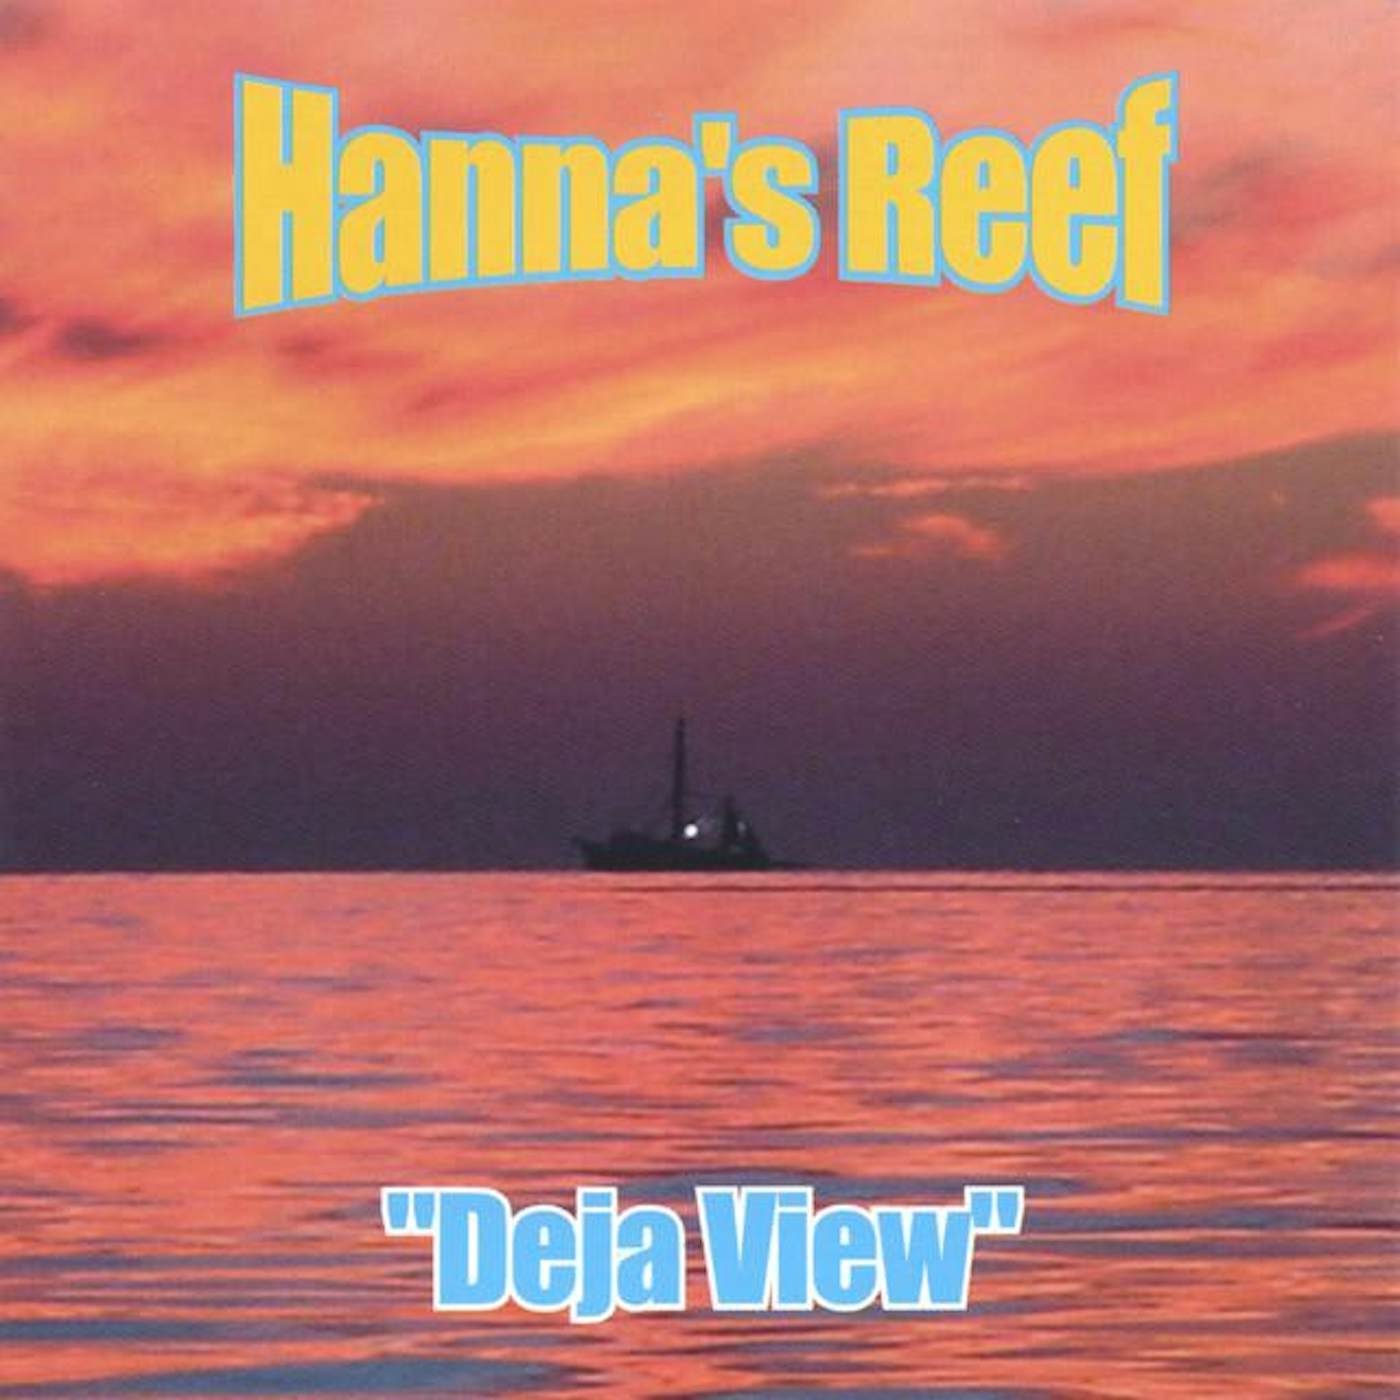 Hanna's Reef